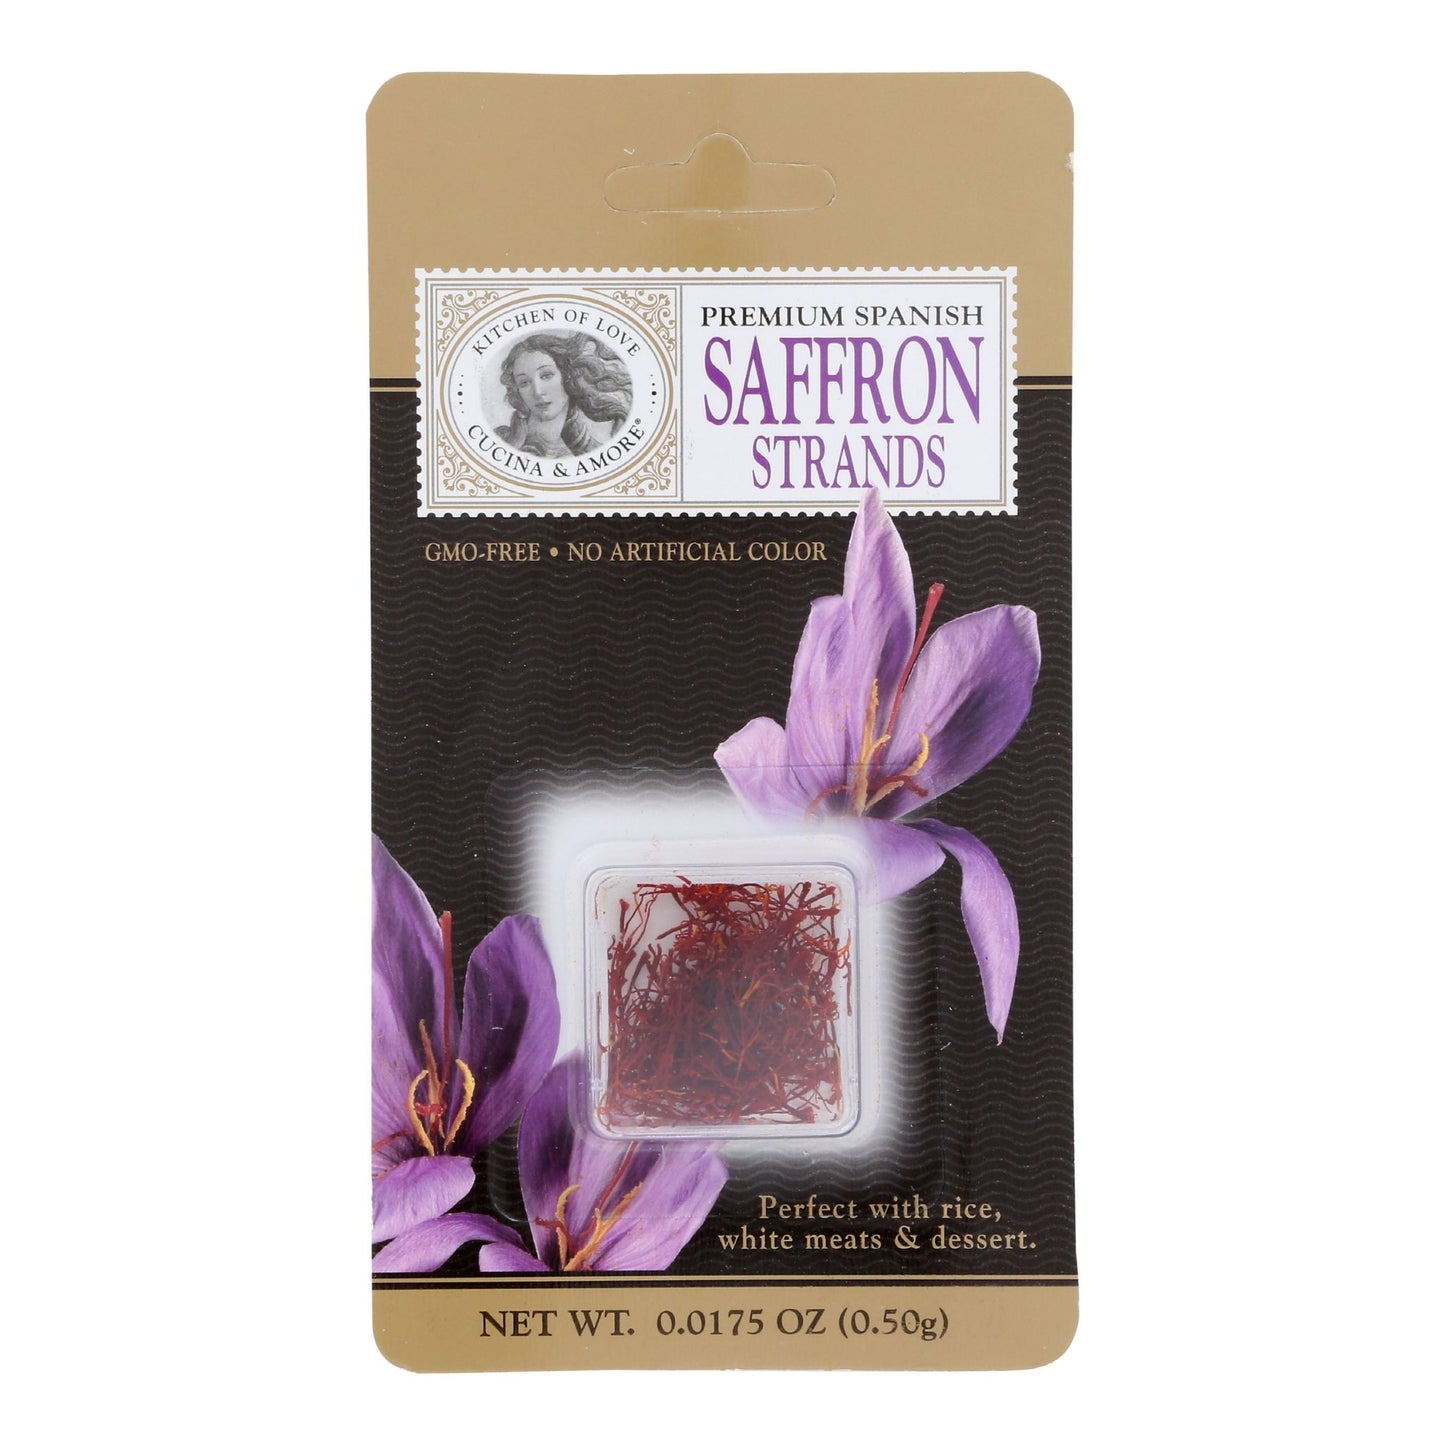 Spanish Saffron Strands - 2 Pack